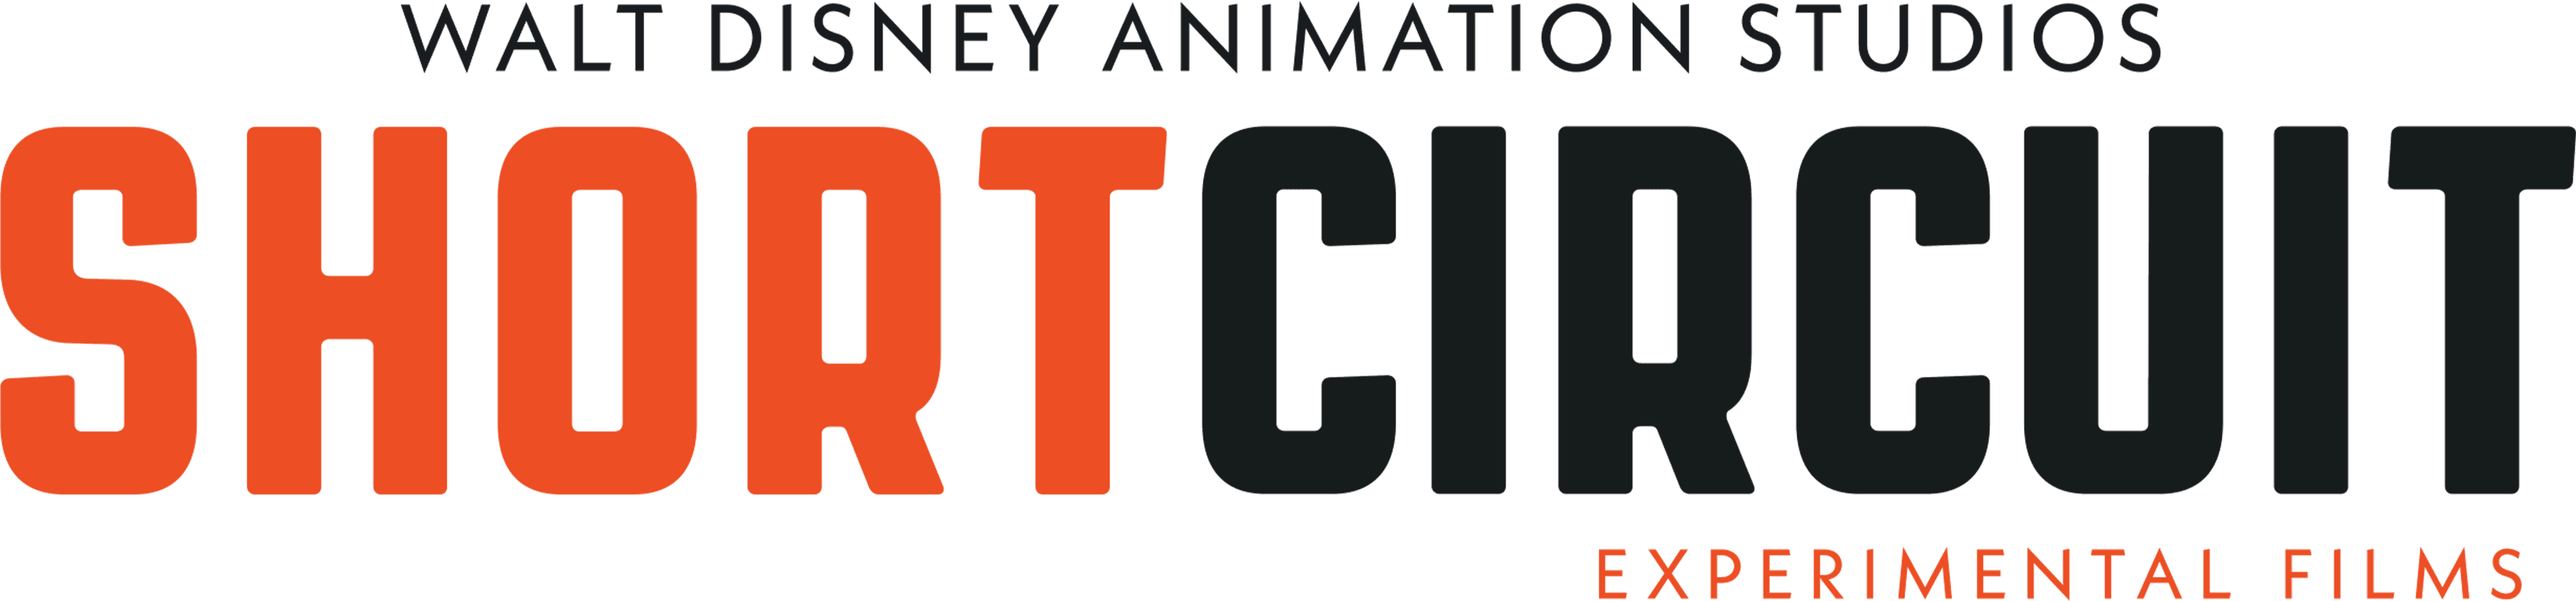 Walt Disney Animation Studios: Short Circuit Experimental Films logo